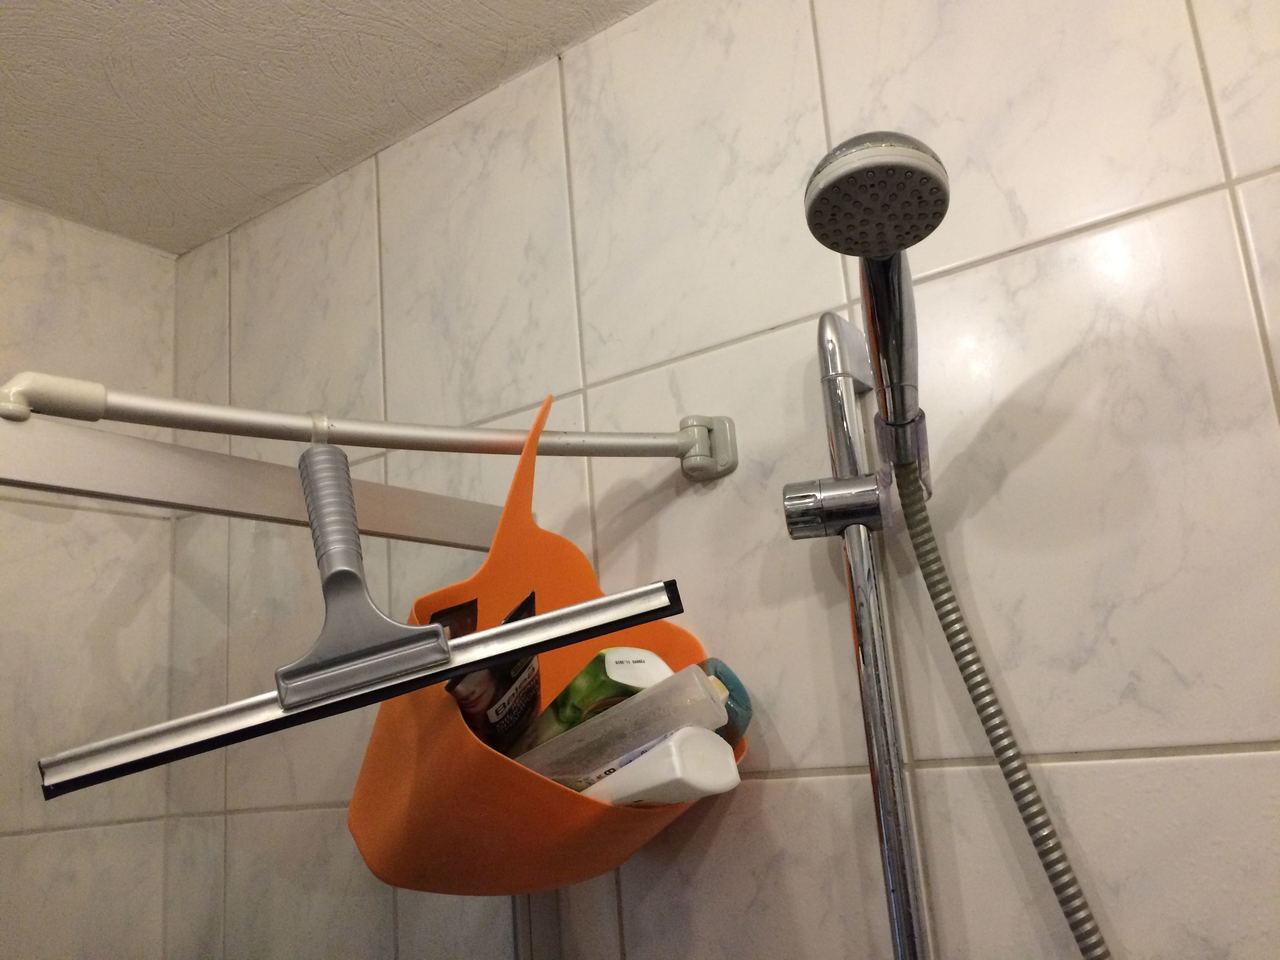 Duschkabine reinigen: mit diesen Tipps klappt's - Utopia.de